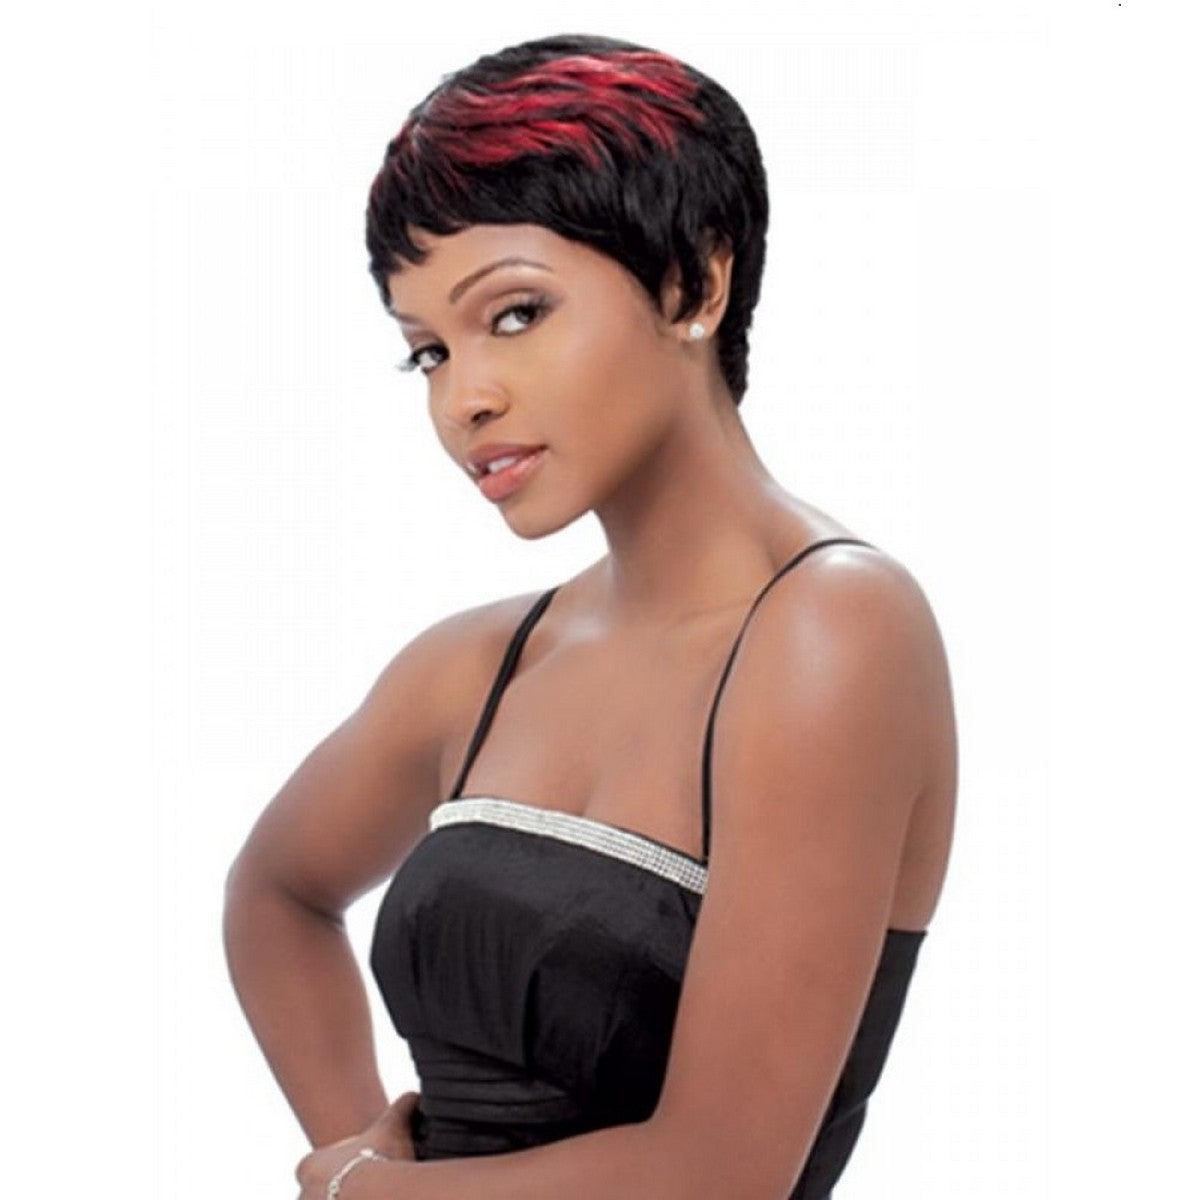 Sensationnel 100% Human Hair Bump Wig - EASY 27 - Marcia Hair Extensions